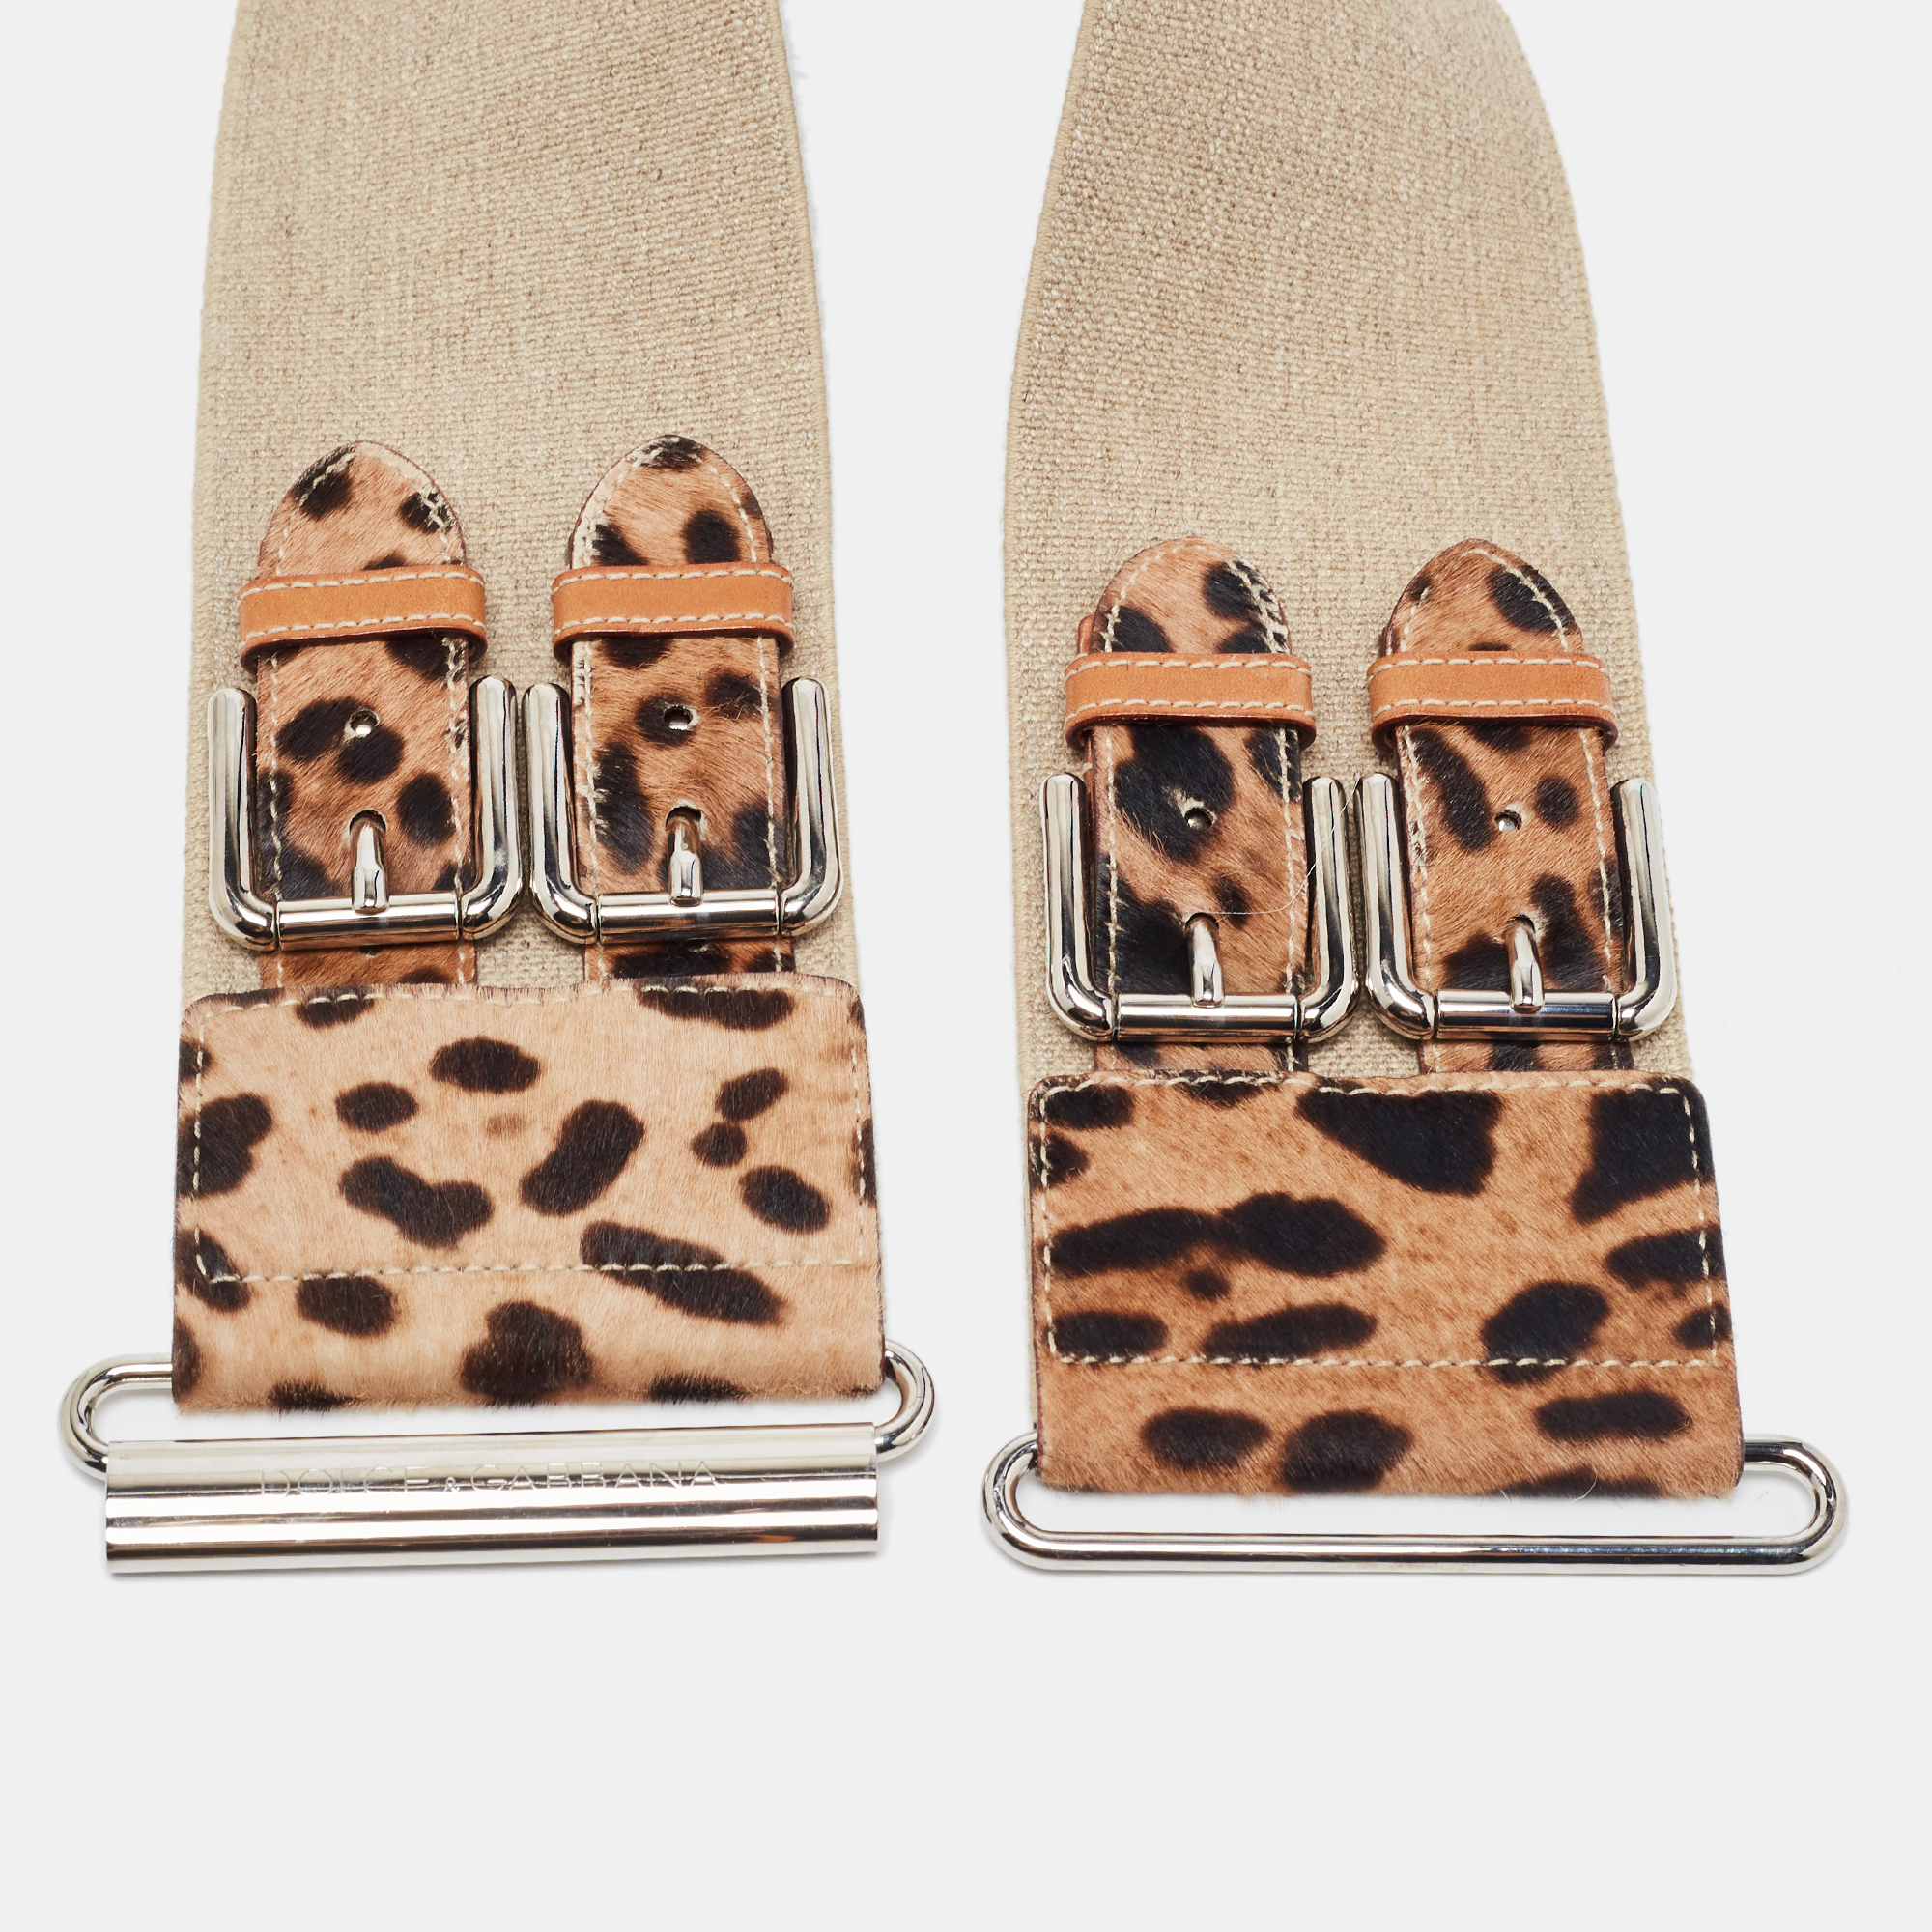 Dolce & Gabbana Brown/Beige Leopard Print Calfhair And Elastic Canvas Double Buckle Waist Belt 75CM